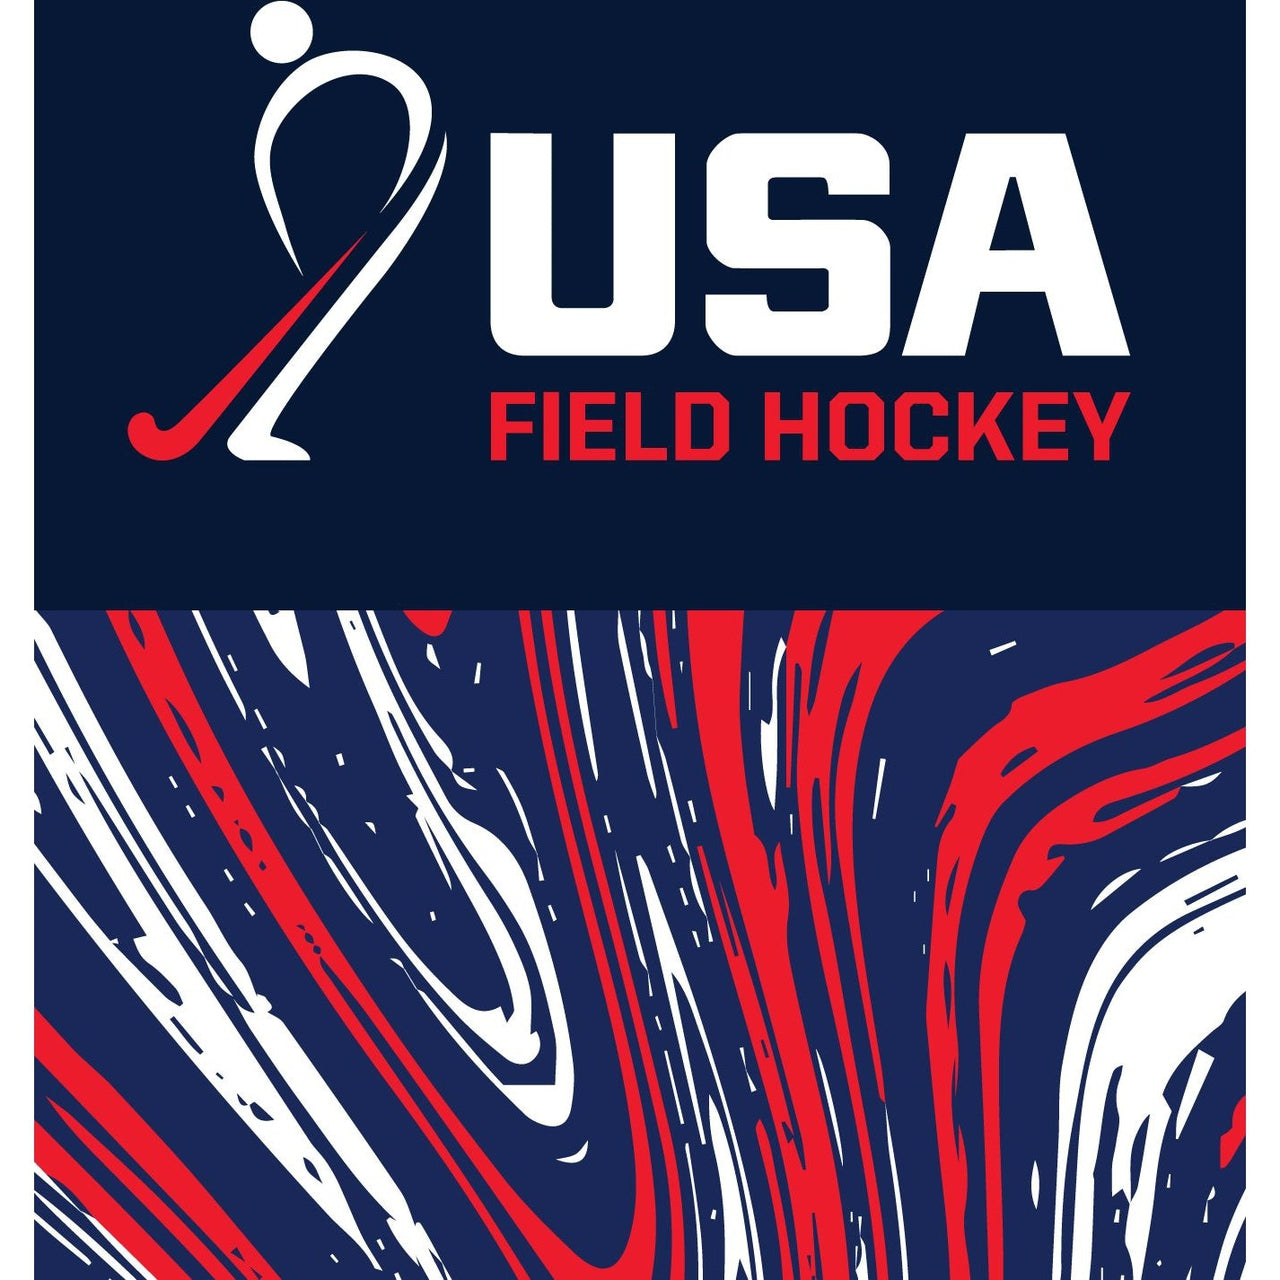 USA Field Hockey Swirls Socks - Hocsocx Inc